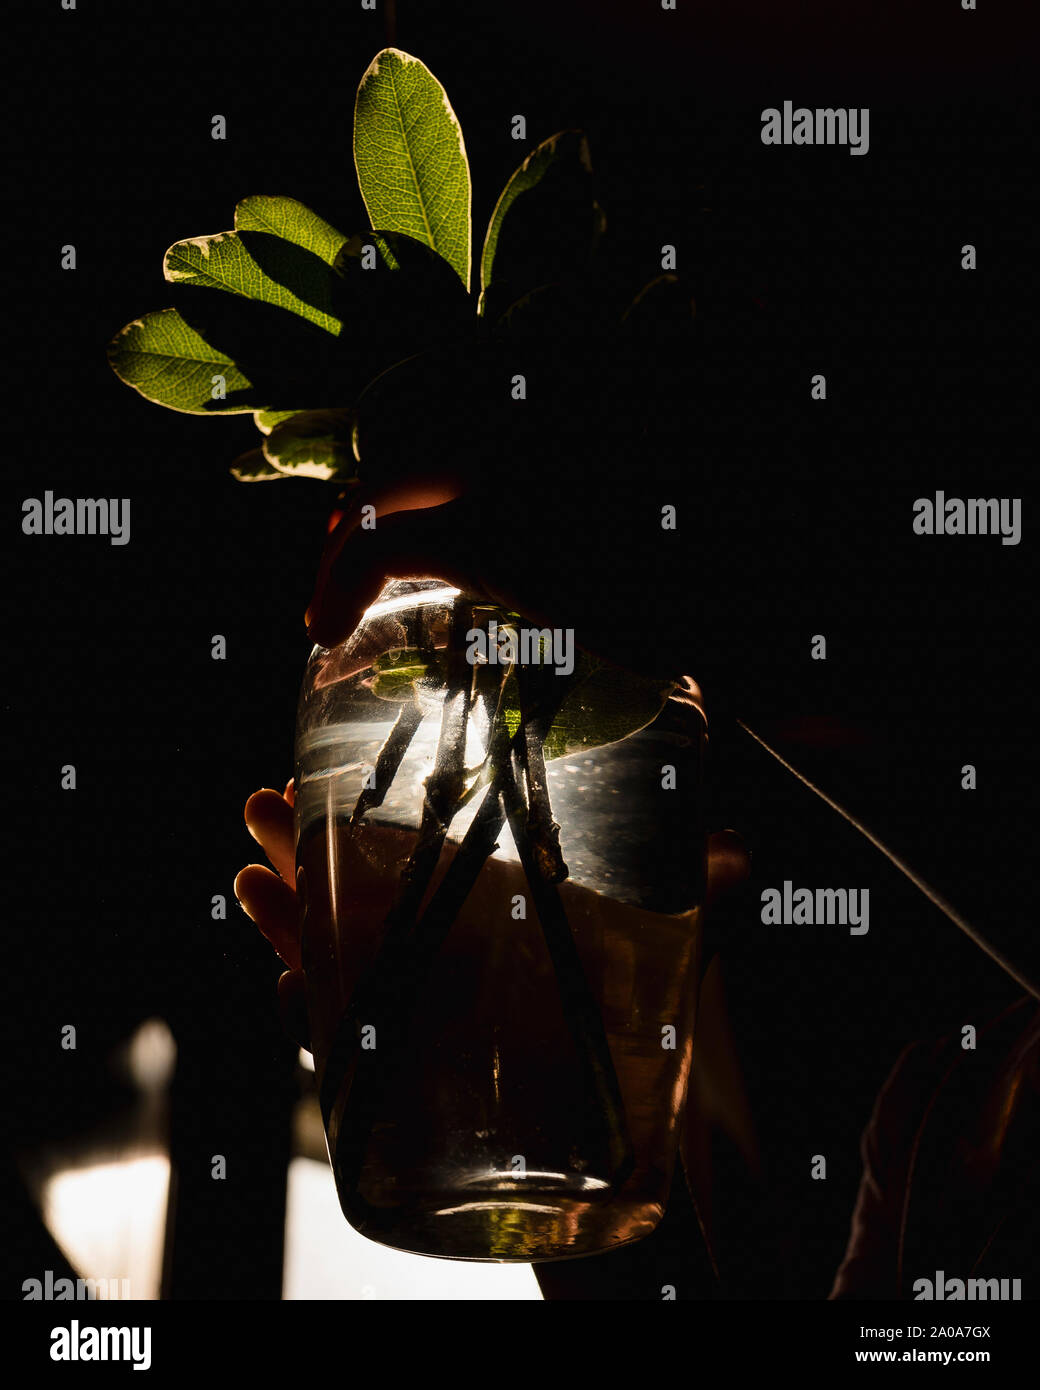 Vase of Foliage Held in Sunlight Stock Photo